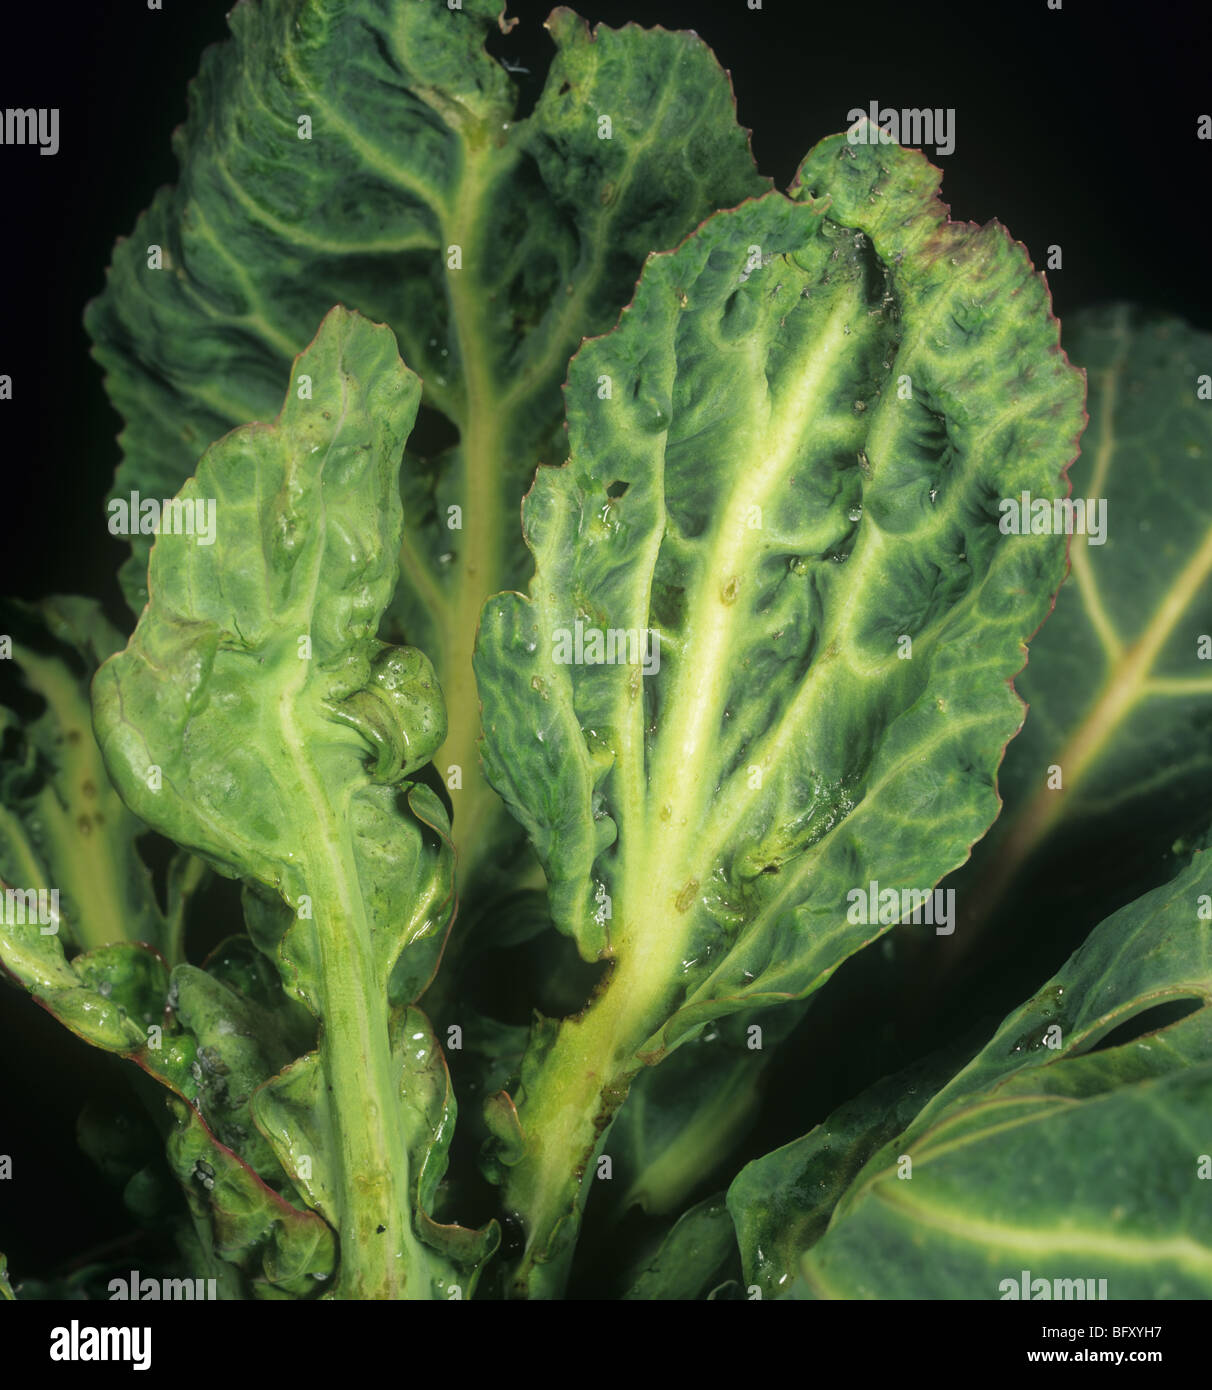 Cauliflower mosaic virus distortion of leaves of spring cabbage Stock Photo